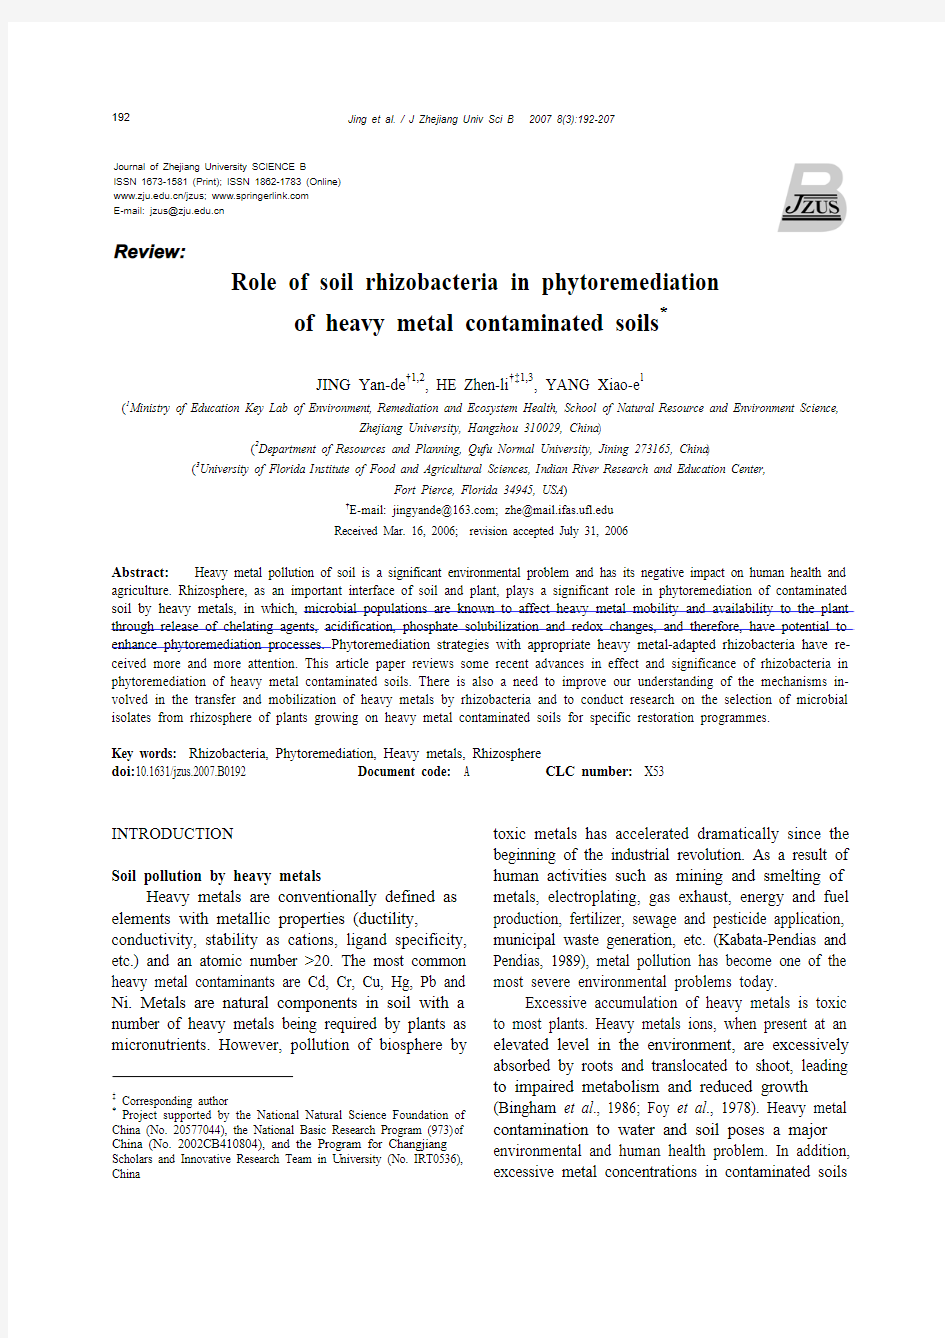 Role of soil rhizobacteria in phytoremediation